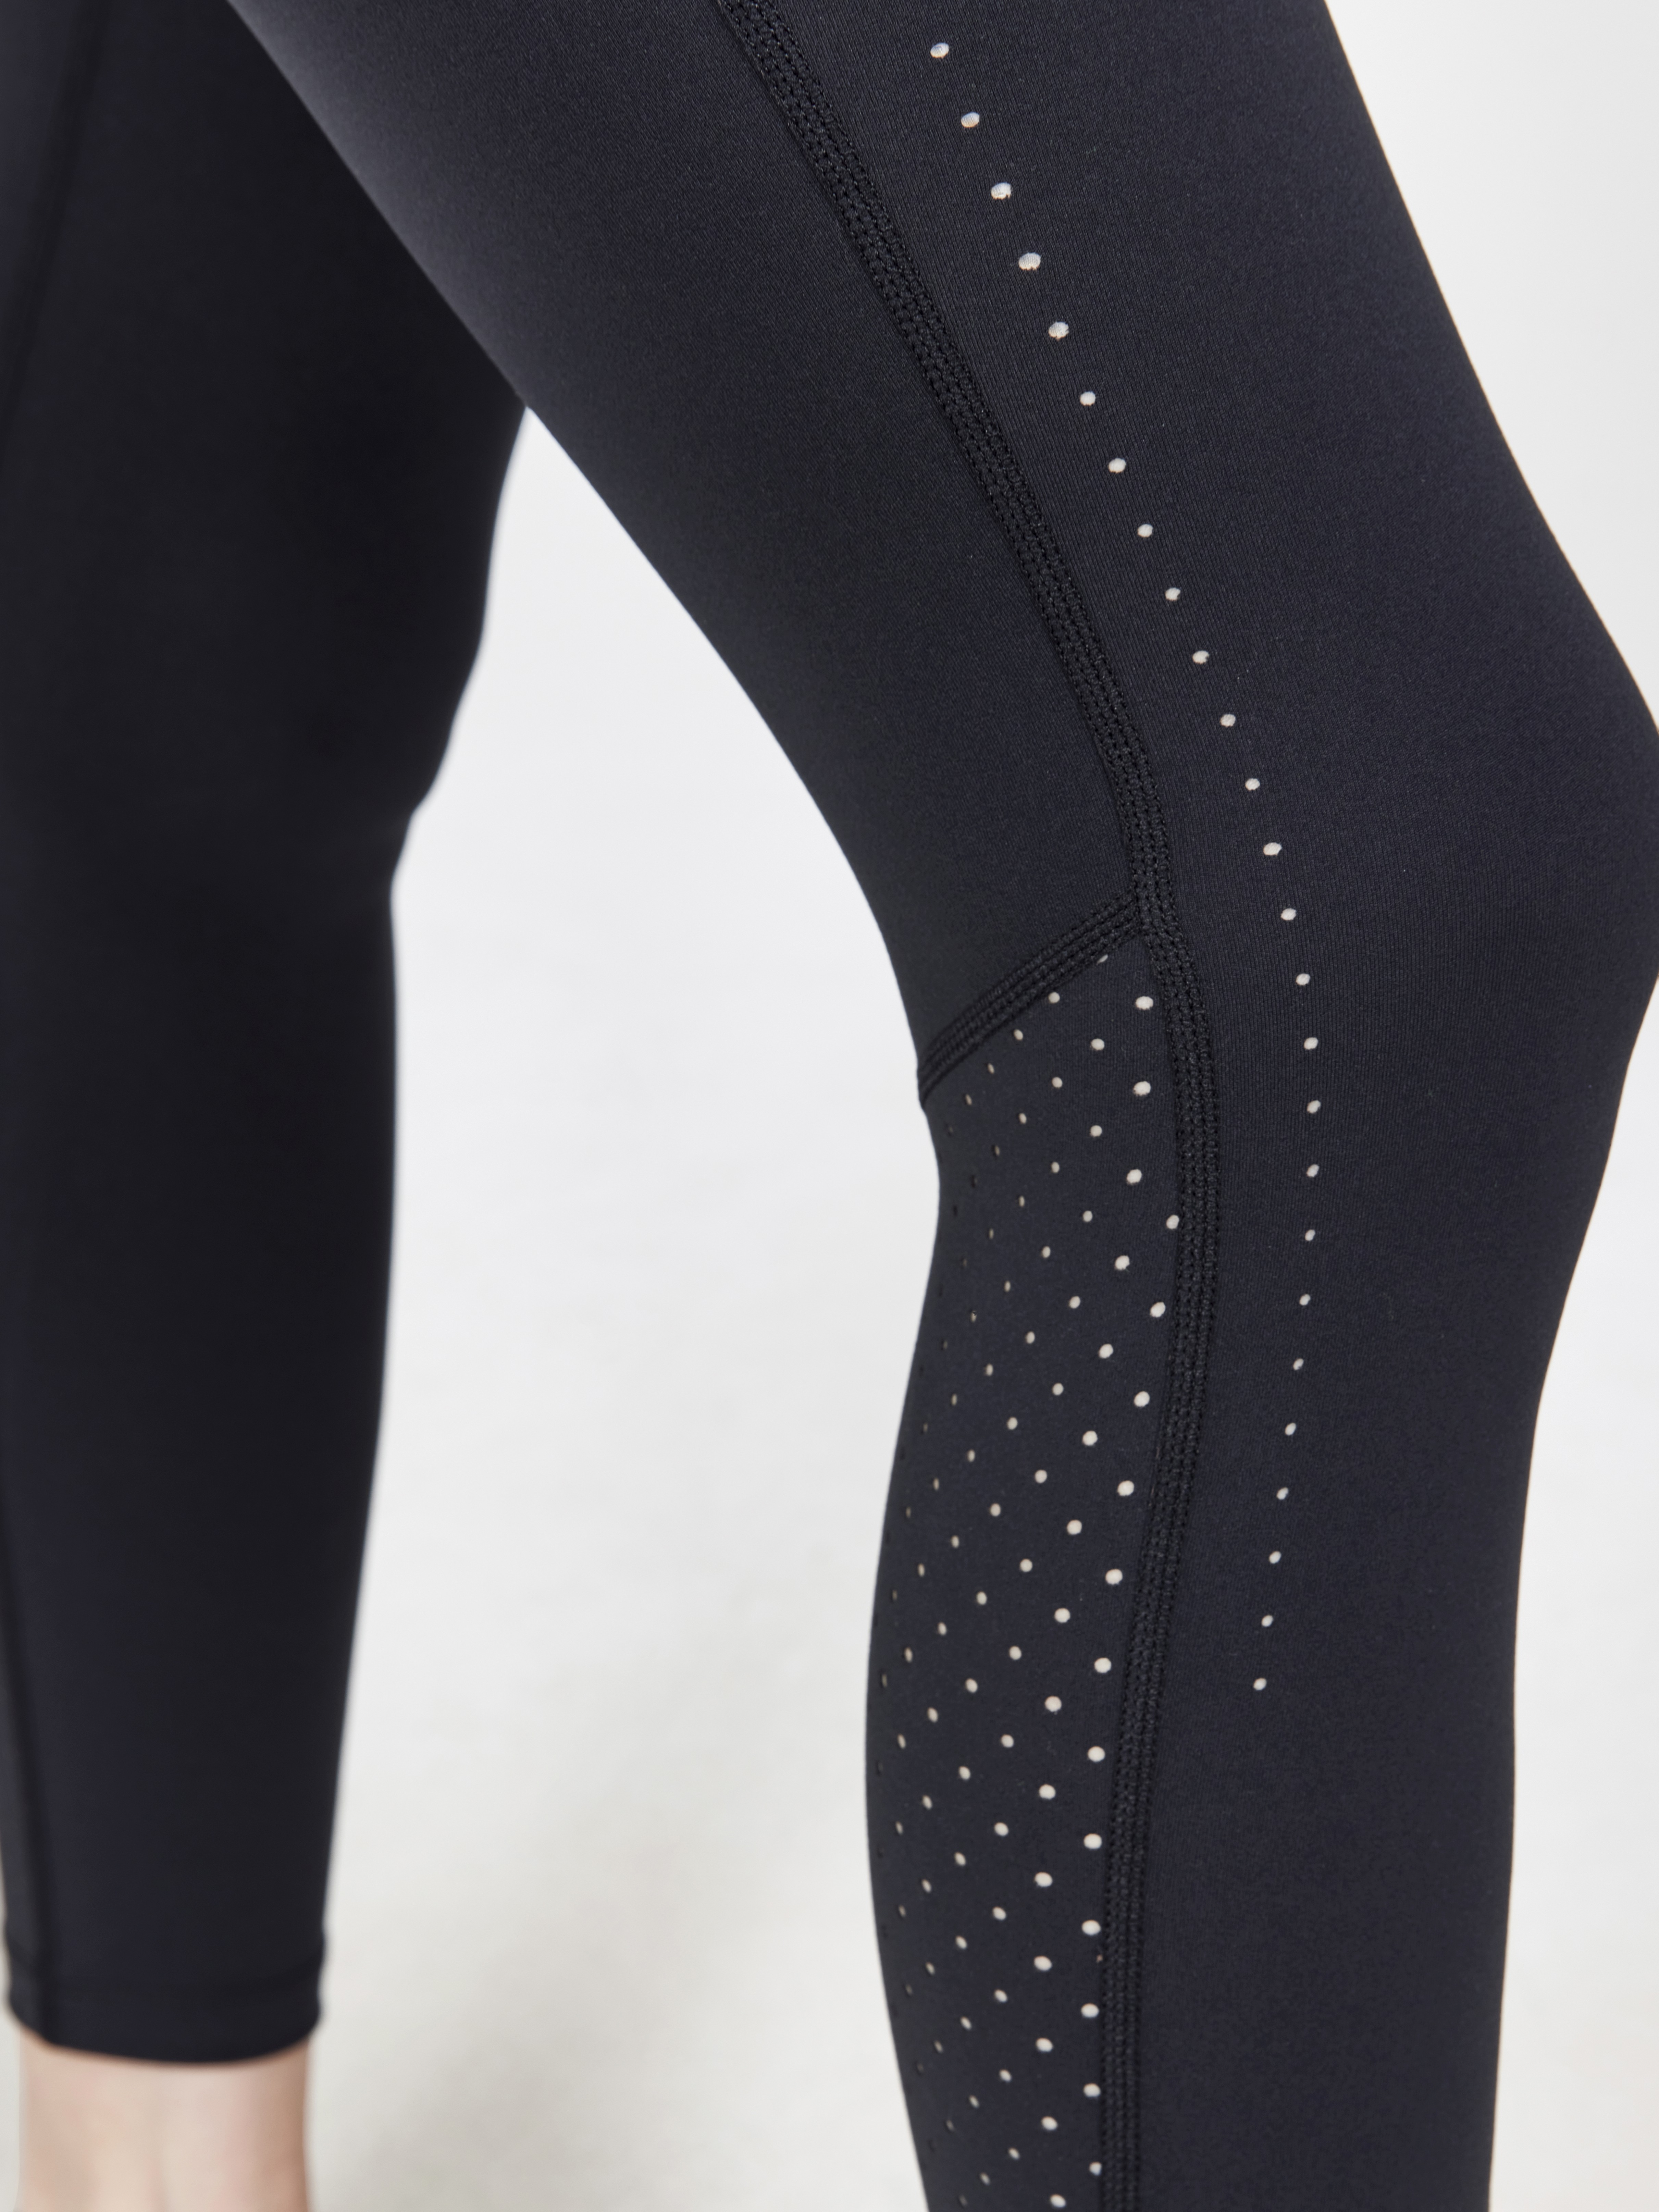 Leggings with perforated details in dark grey, 9.99€